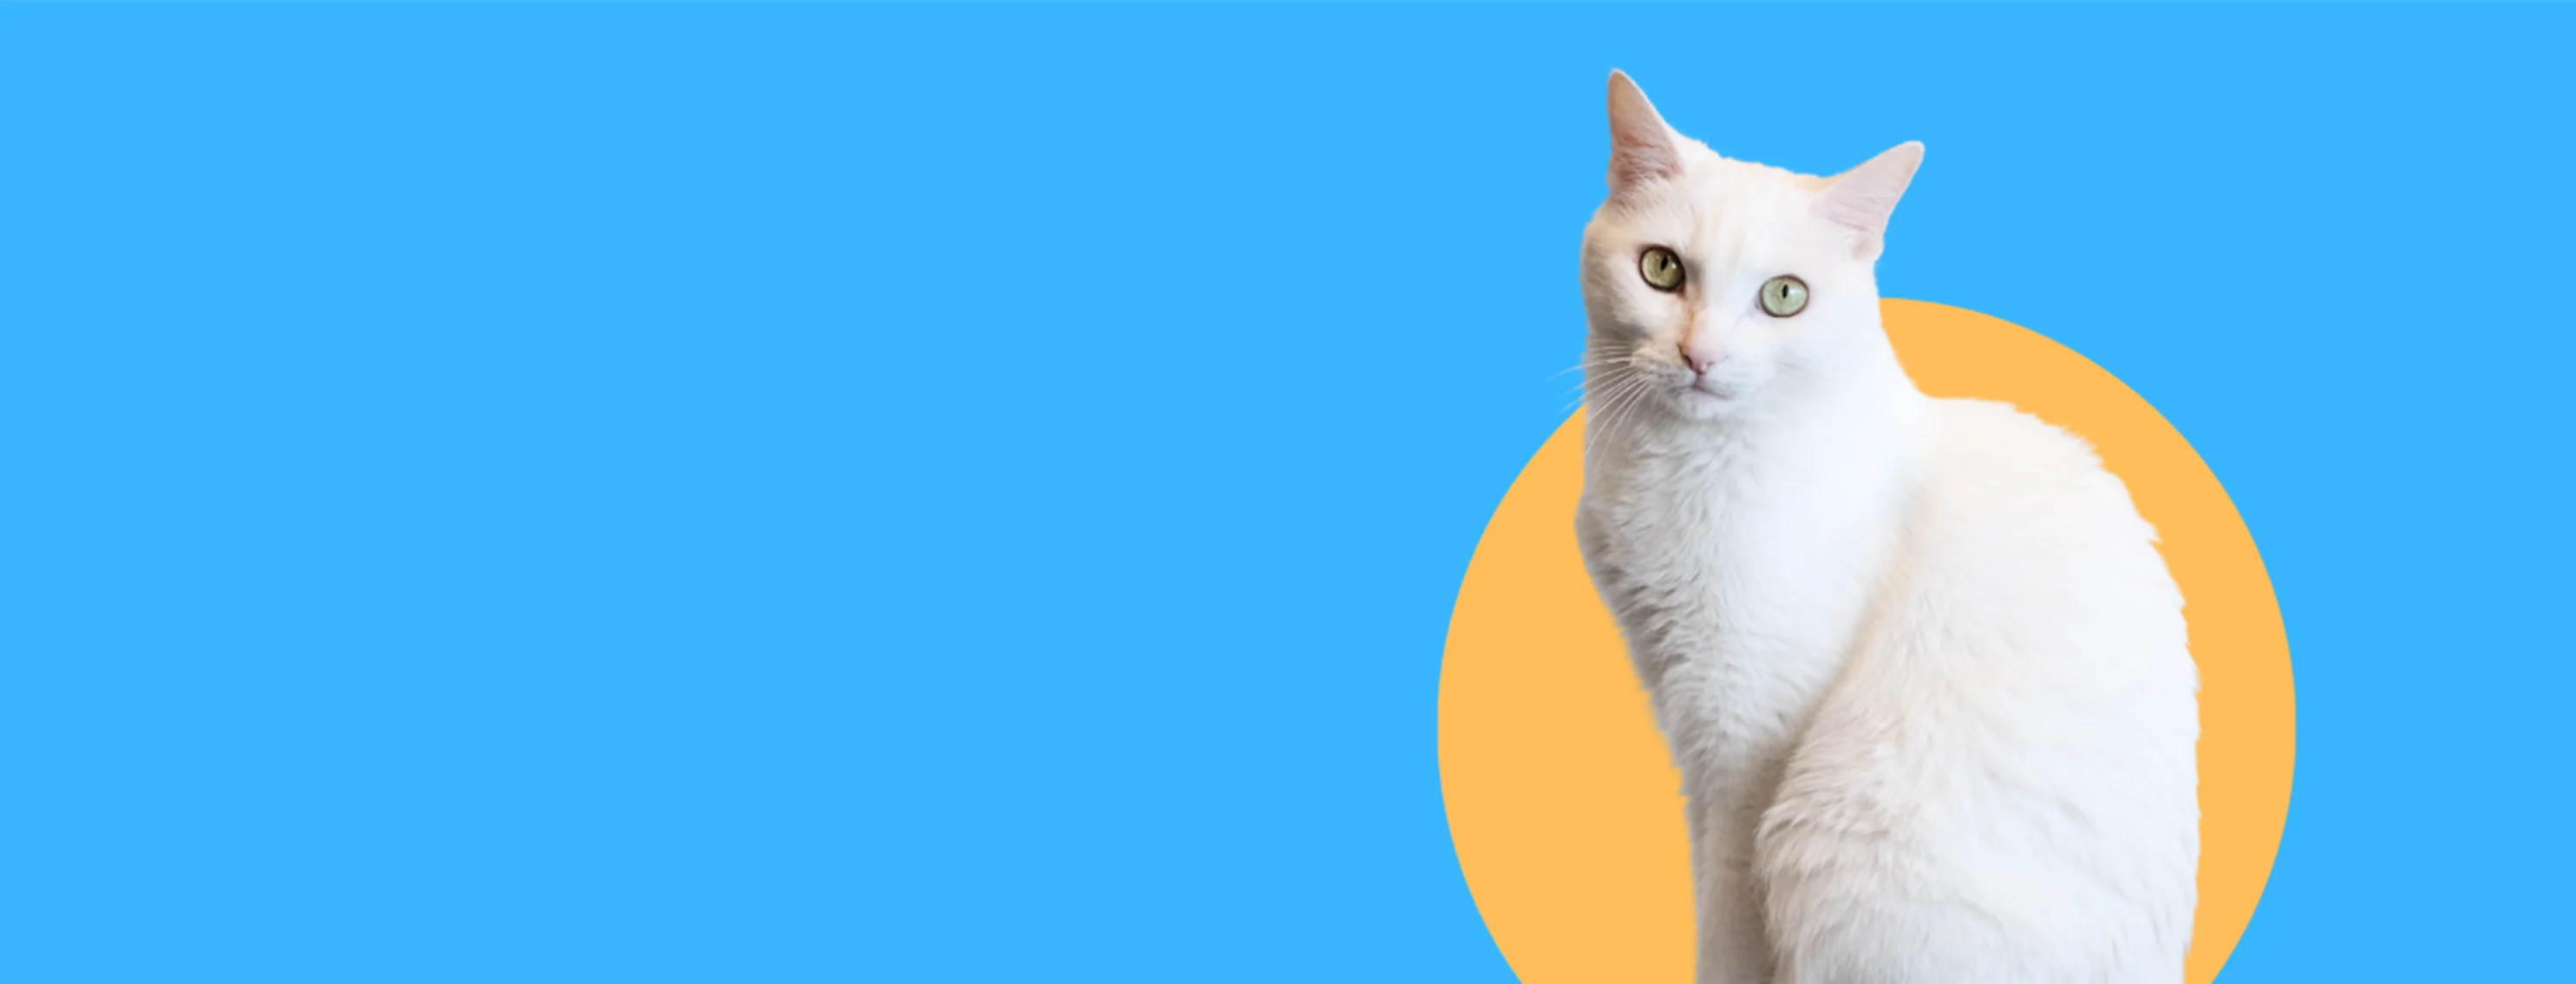 White cat on blue background